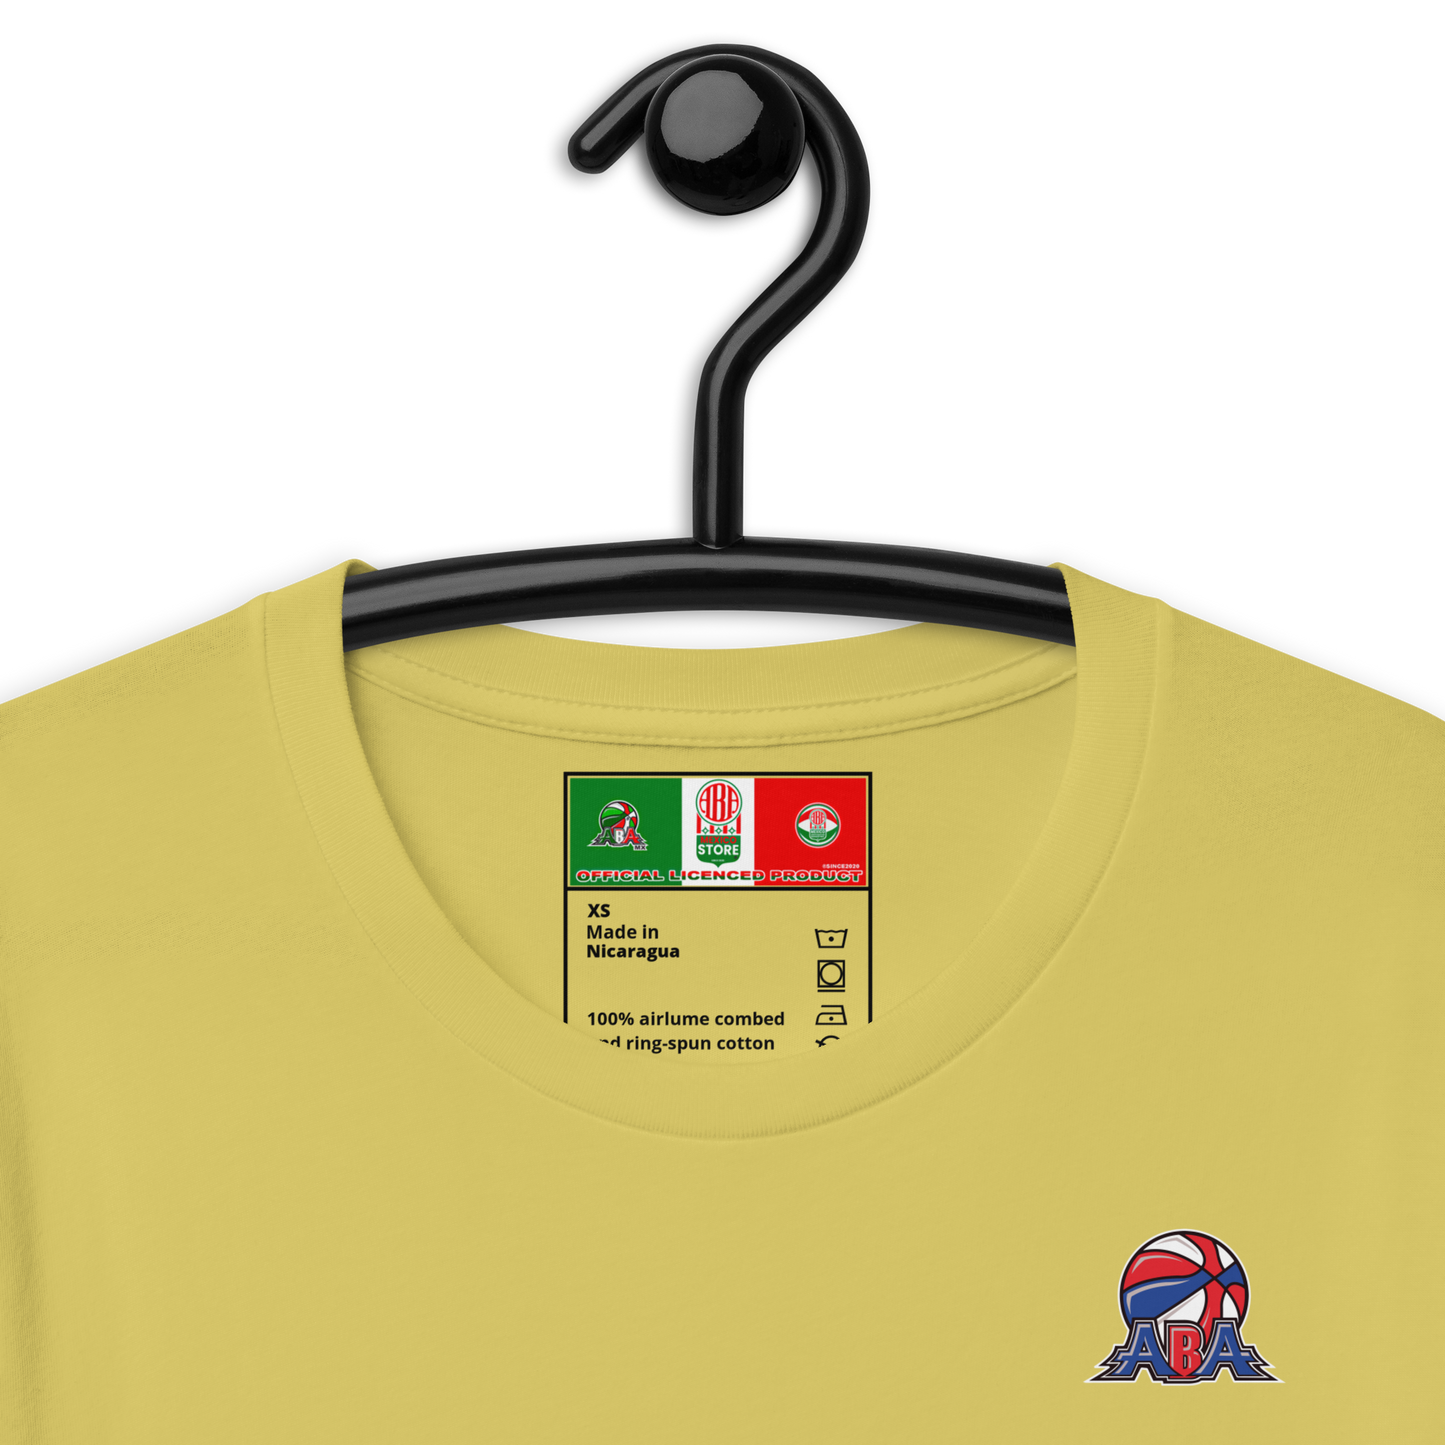 SUN RAYS OFFICIAL TEAM TSHIRT - Unisex t-shirt